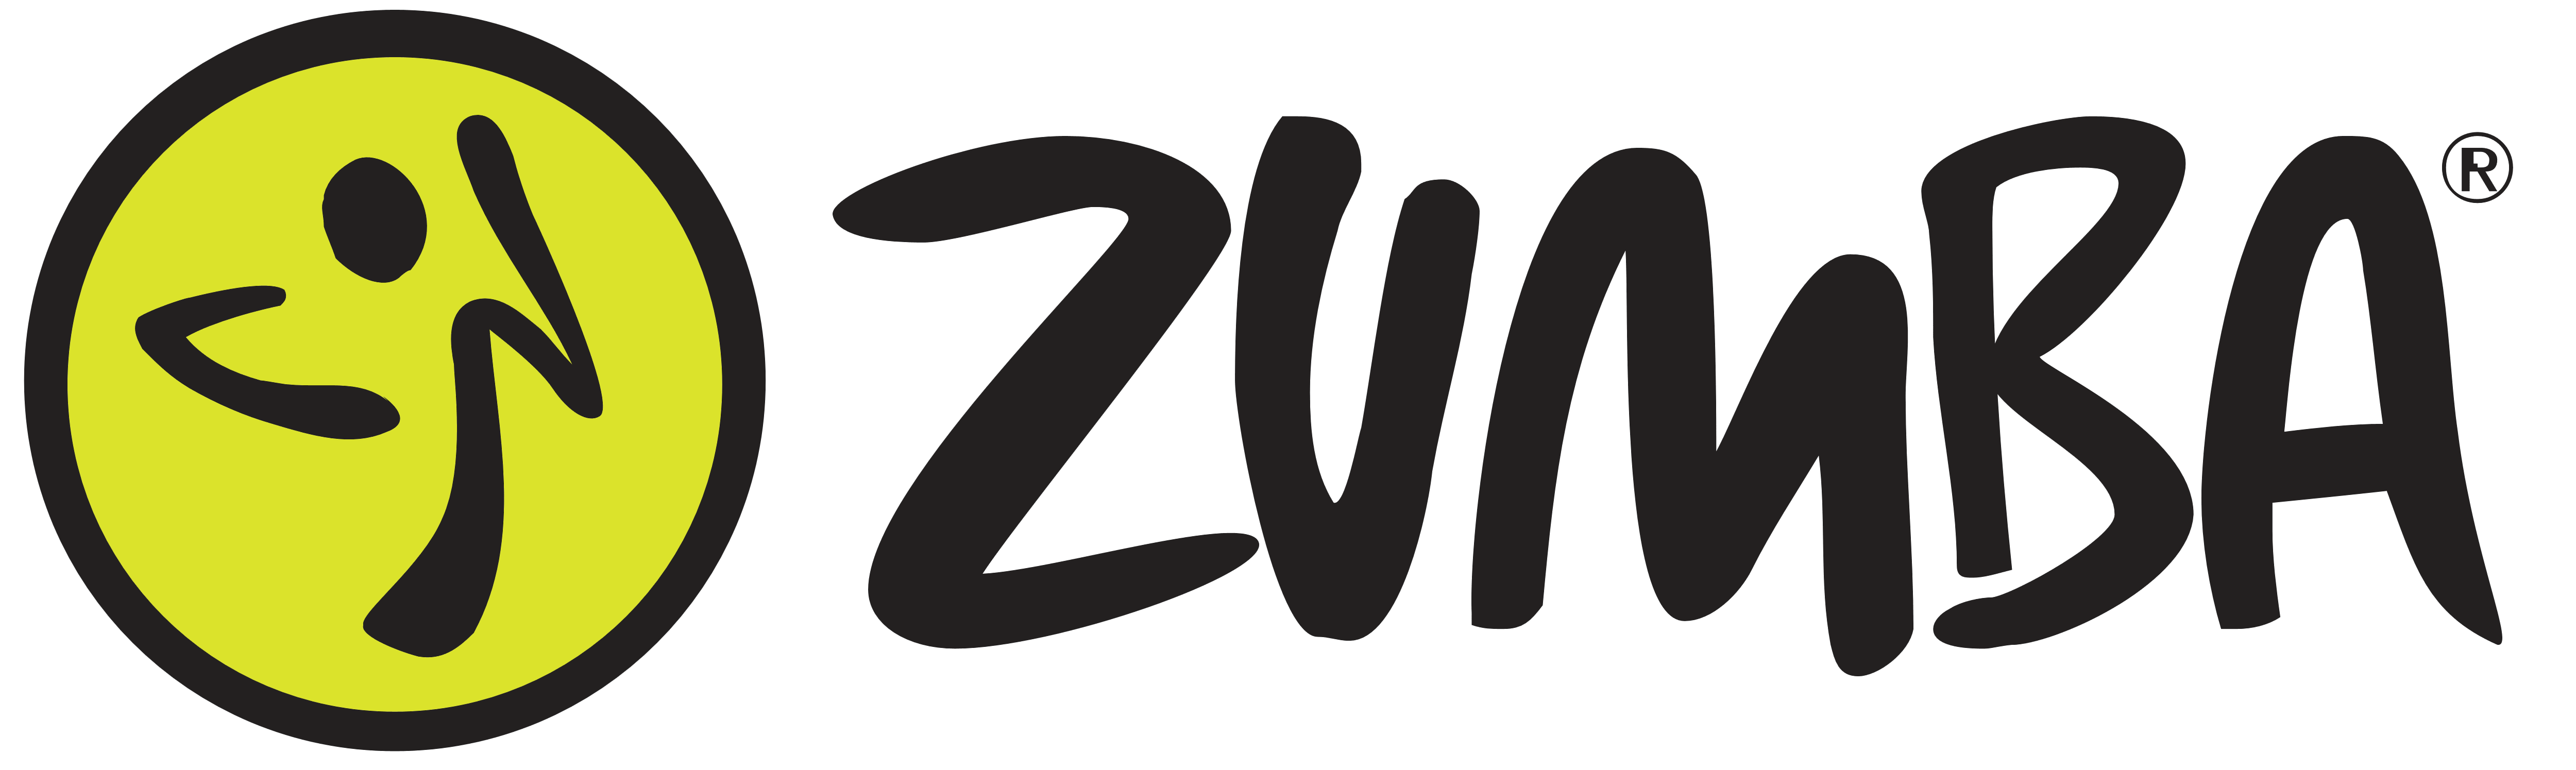 Zumba Fitness â€“ Logos Download